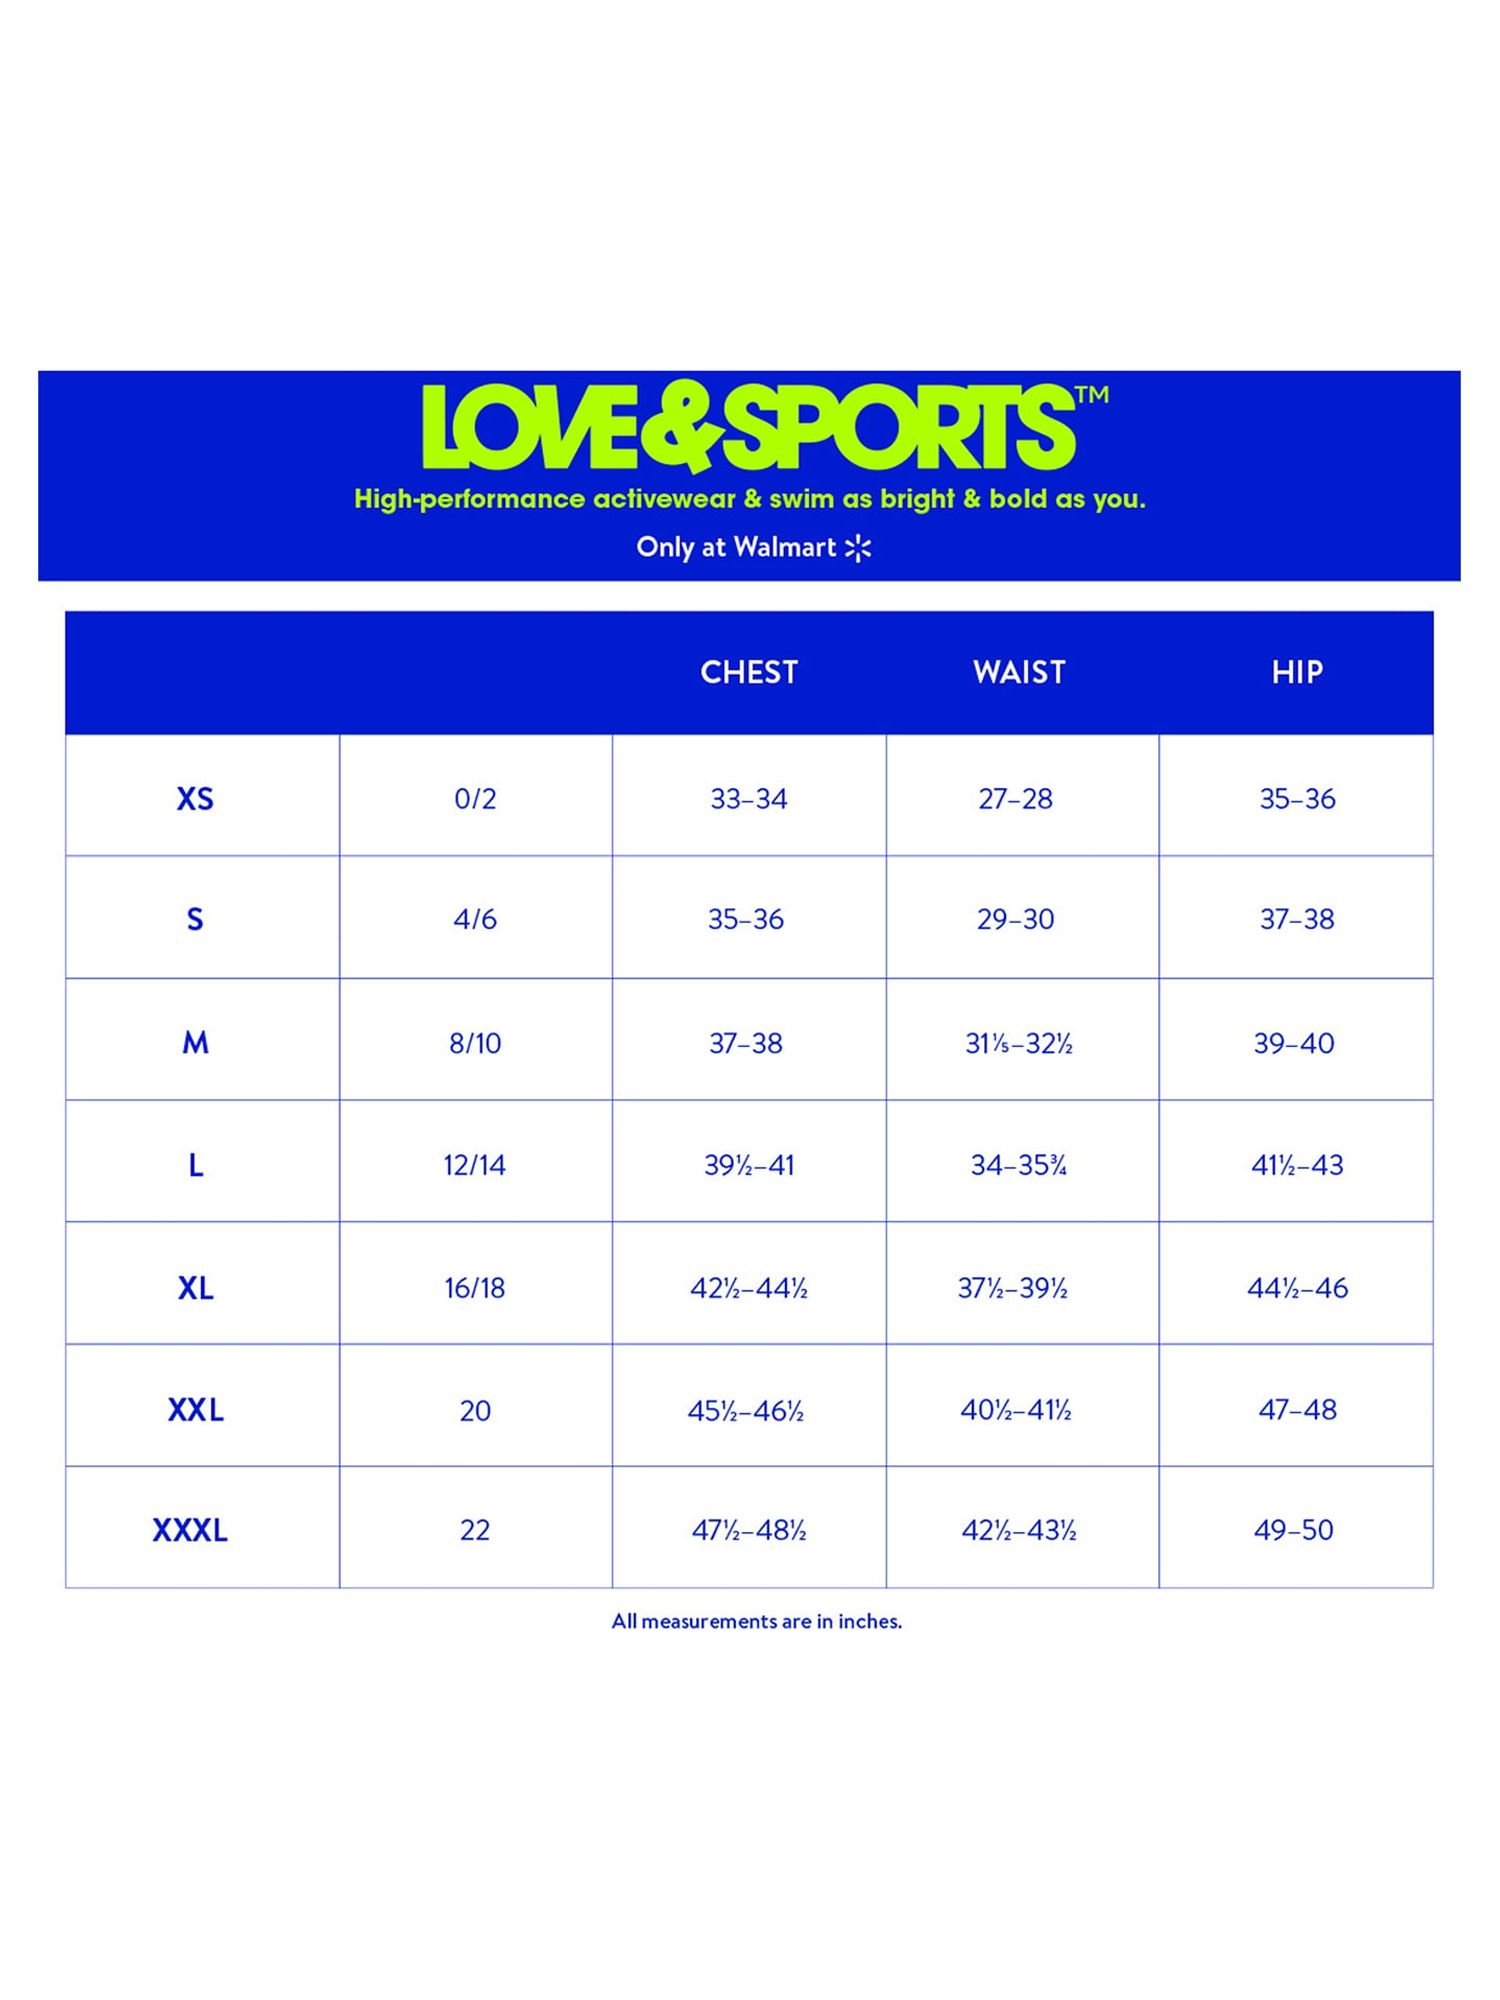 Love & Sports Women’s Game on Tennis Dress, Sizes XS-XXXL - image 5 of 7